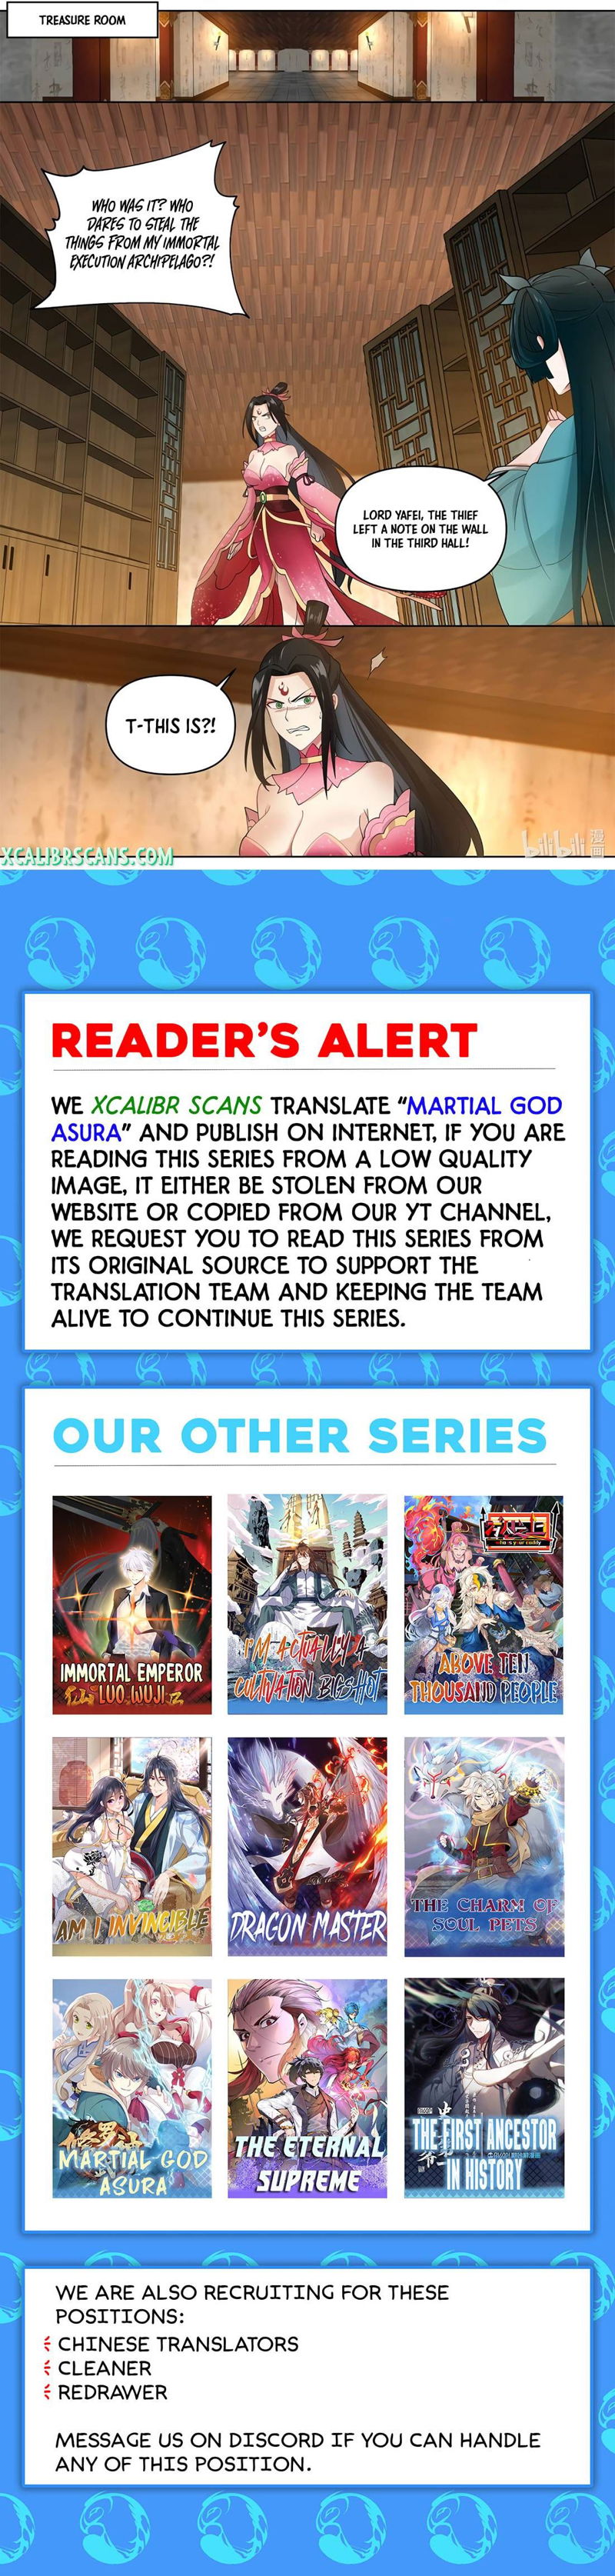 Martial God Asura Chapter 450 page 10